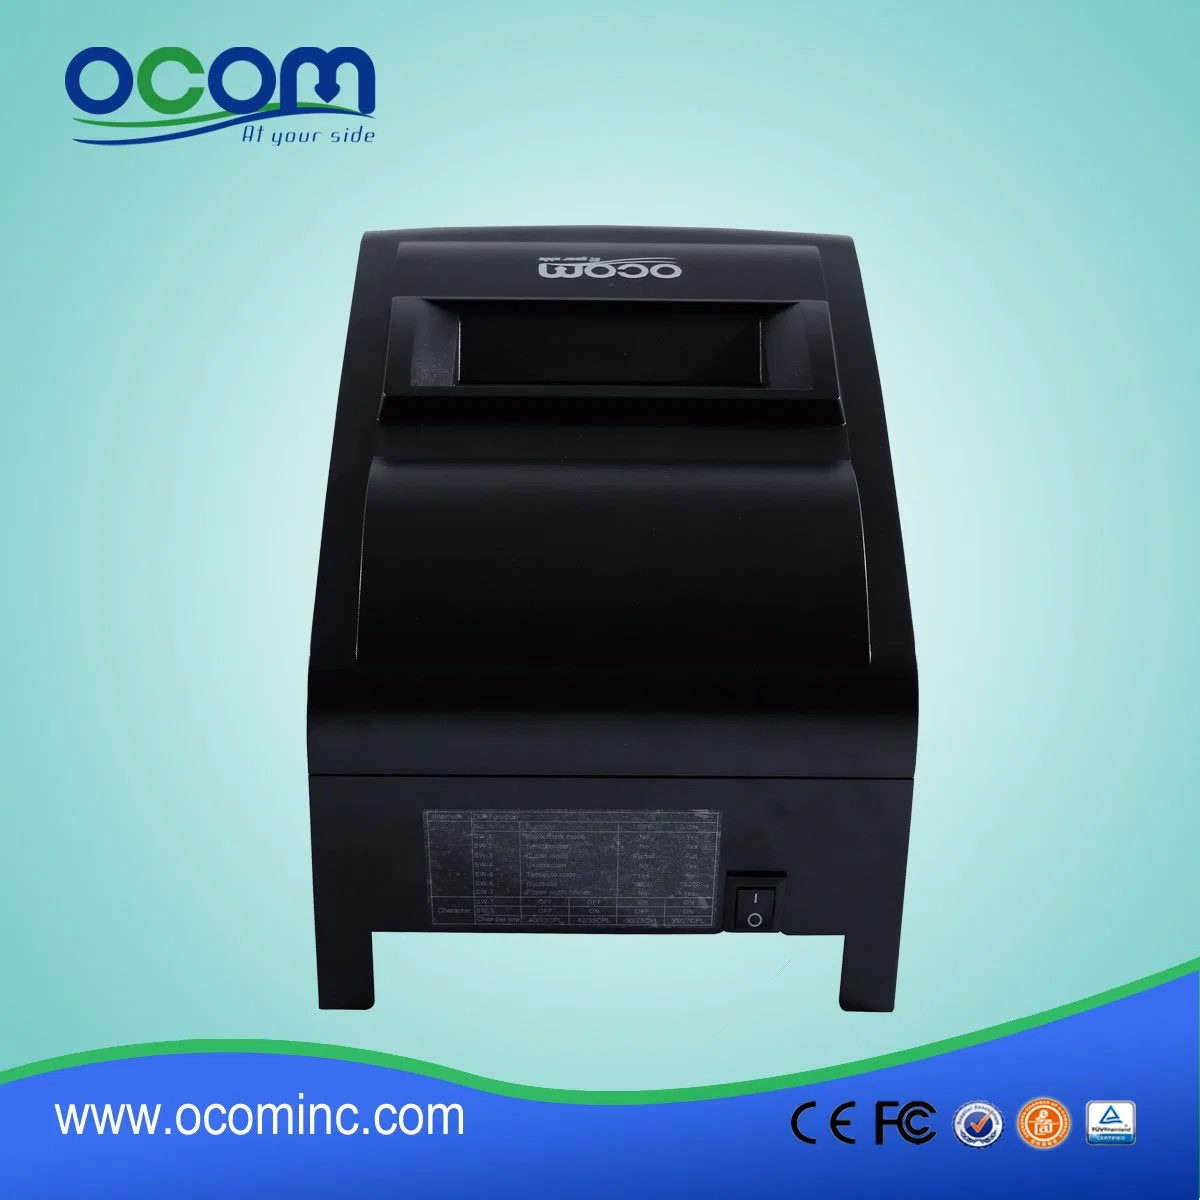 Ocpp-762-P 76mm Impact DOT Matrix Receipt Printer with 36p Parallel Port